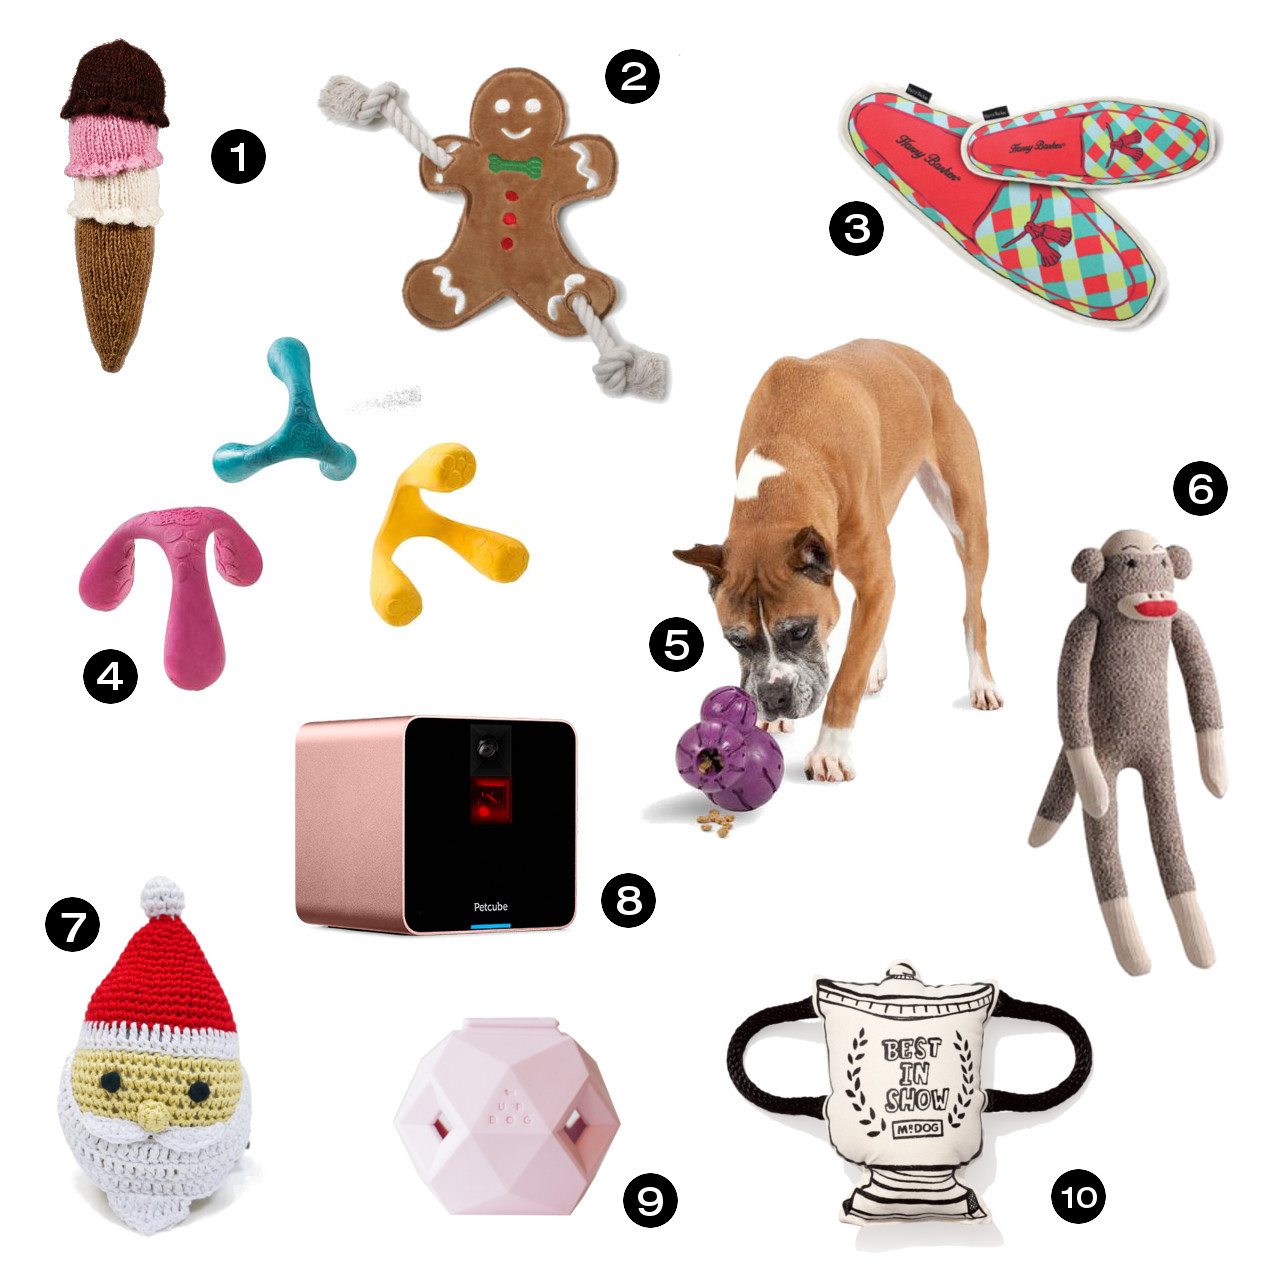 https://design-milk.com/images/2019/10/dog_toy_gift_guide_01.jpg